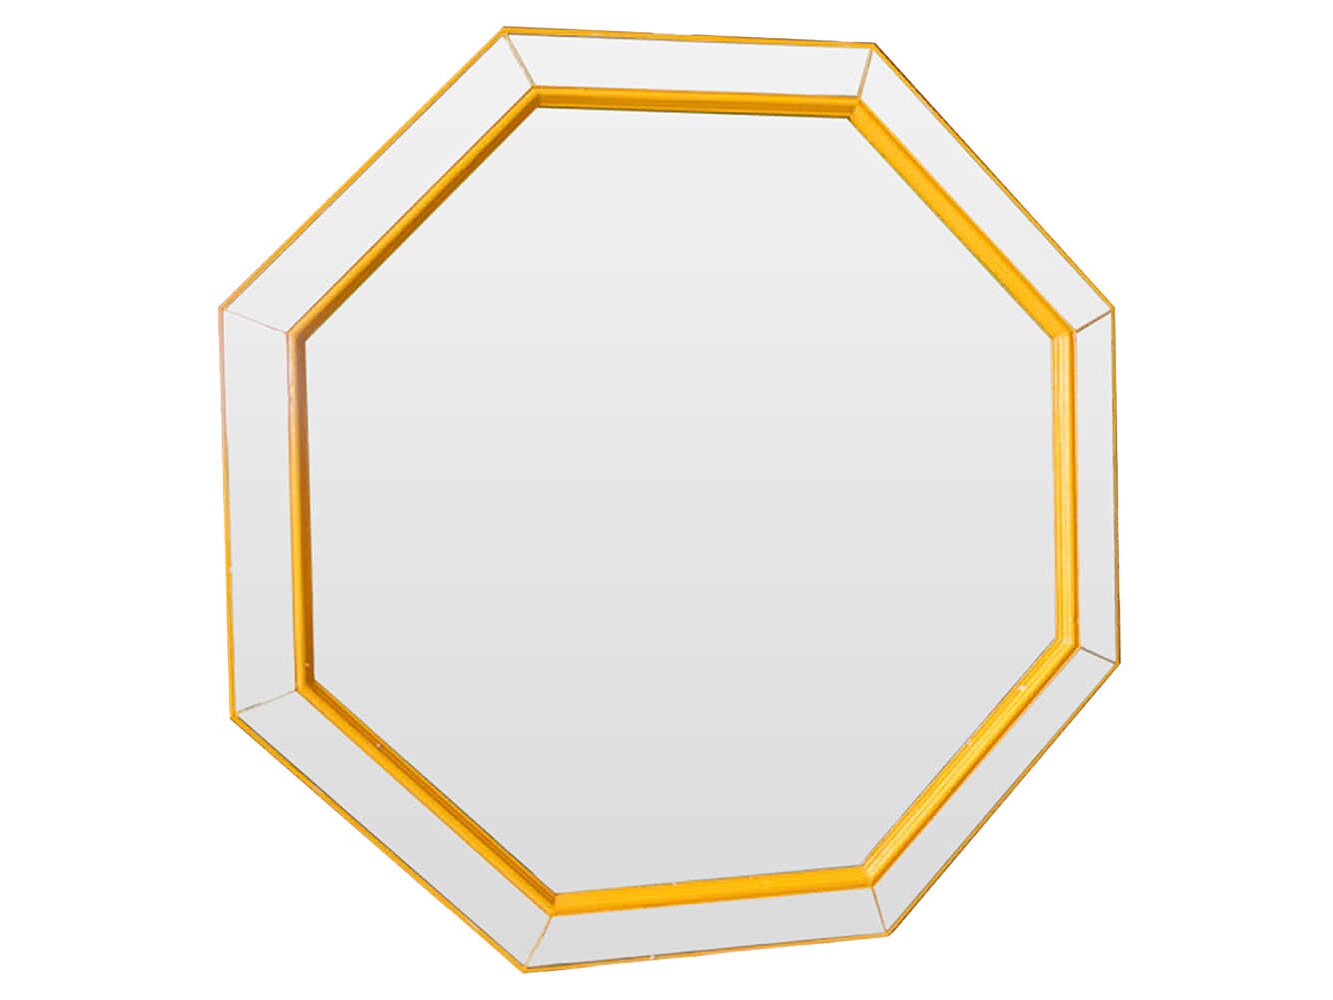  Bountyhome Yellow Octagon